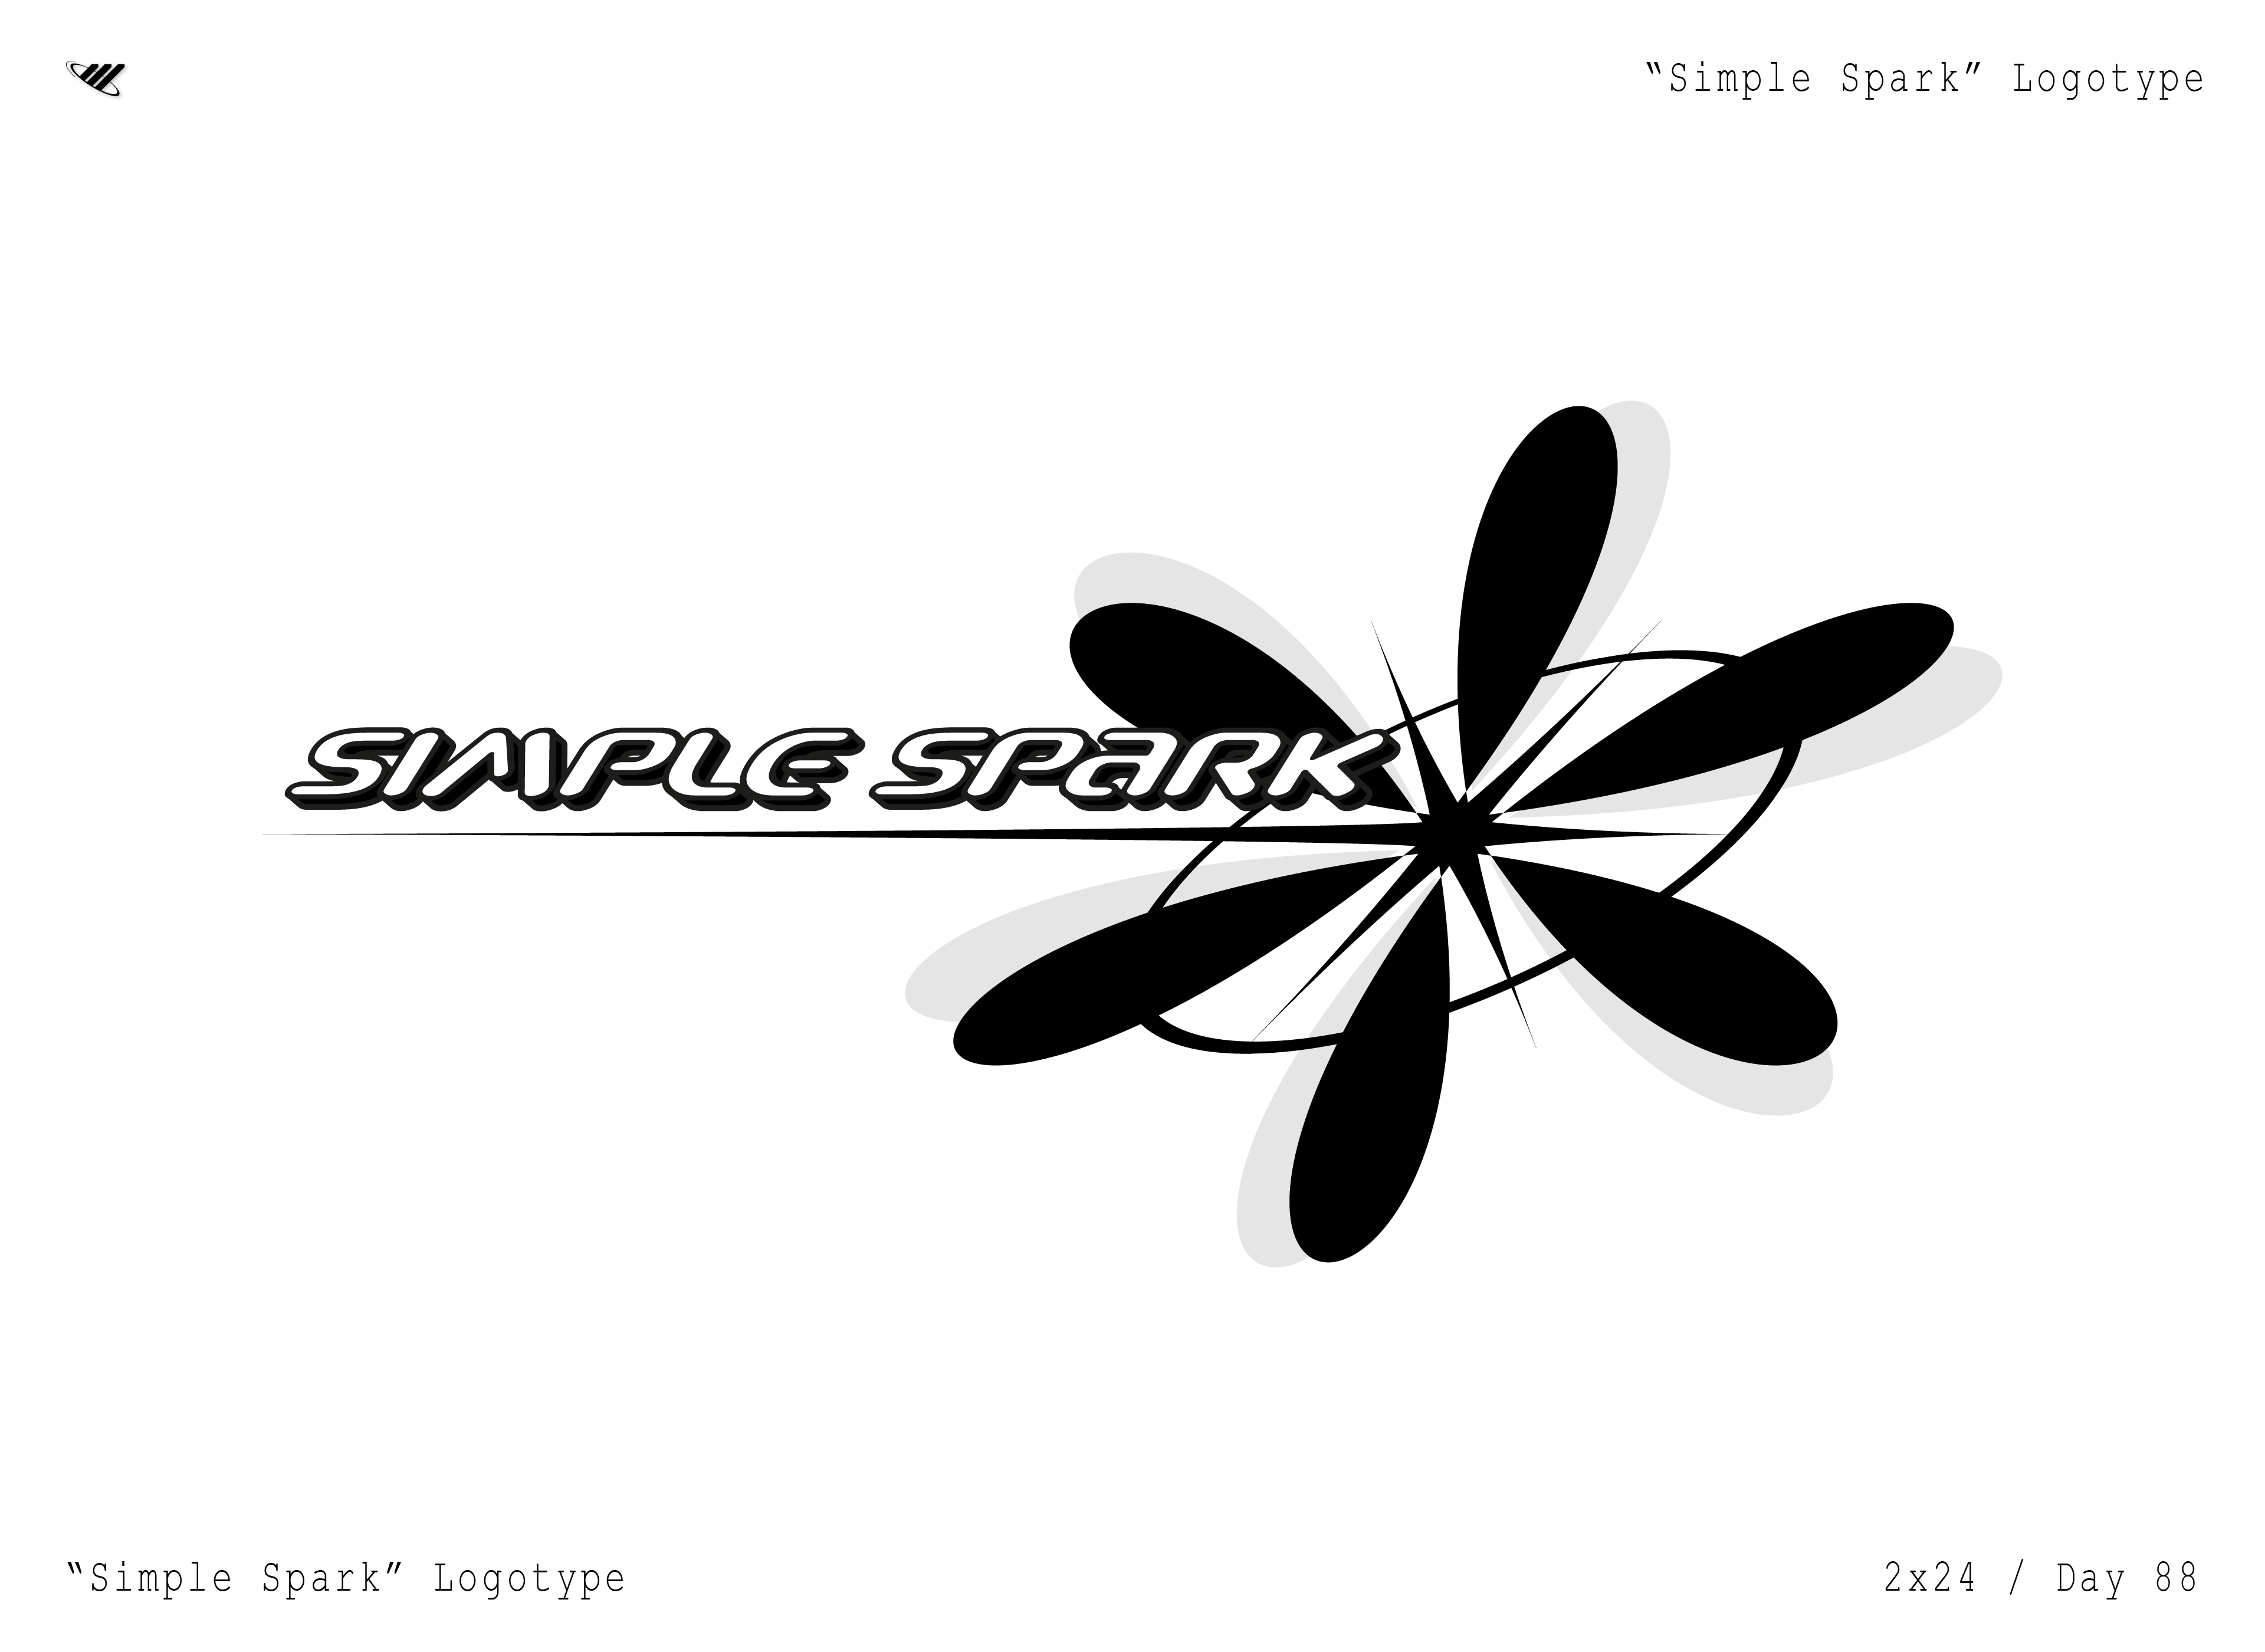 Simple Spark logo type.